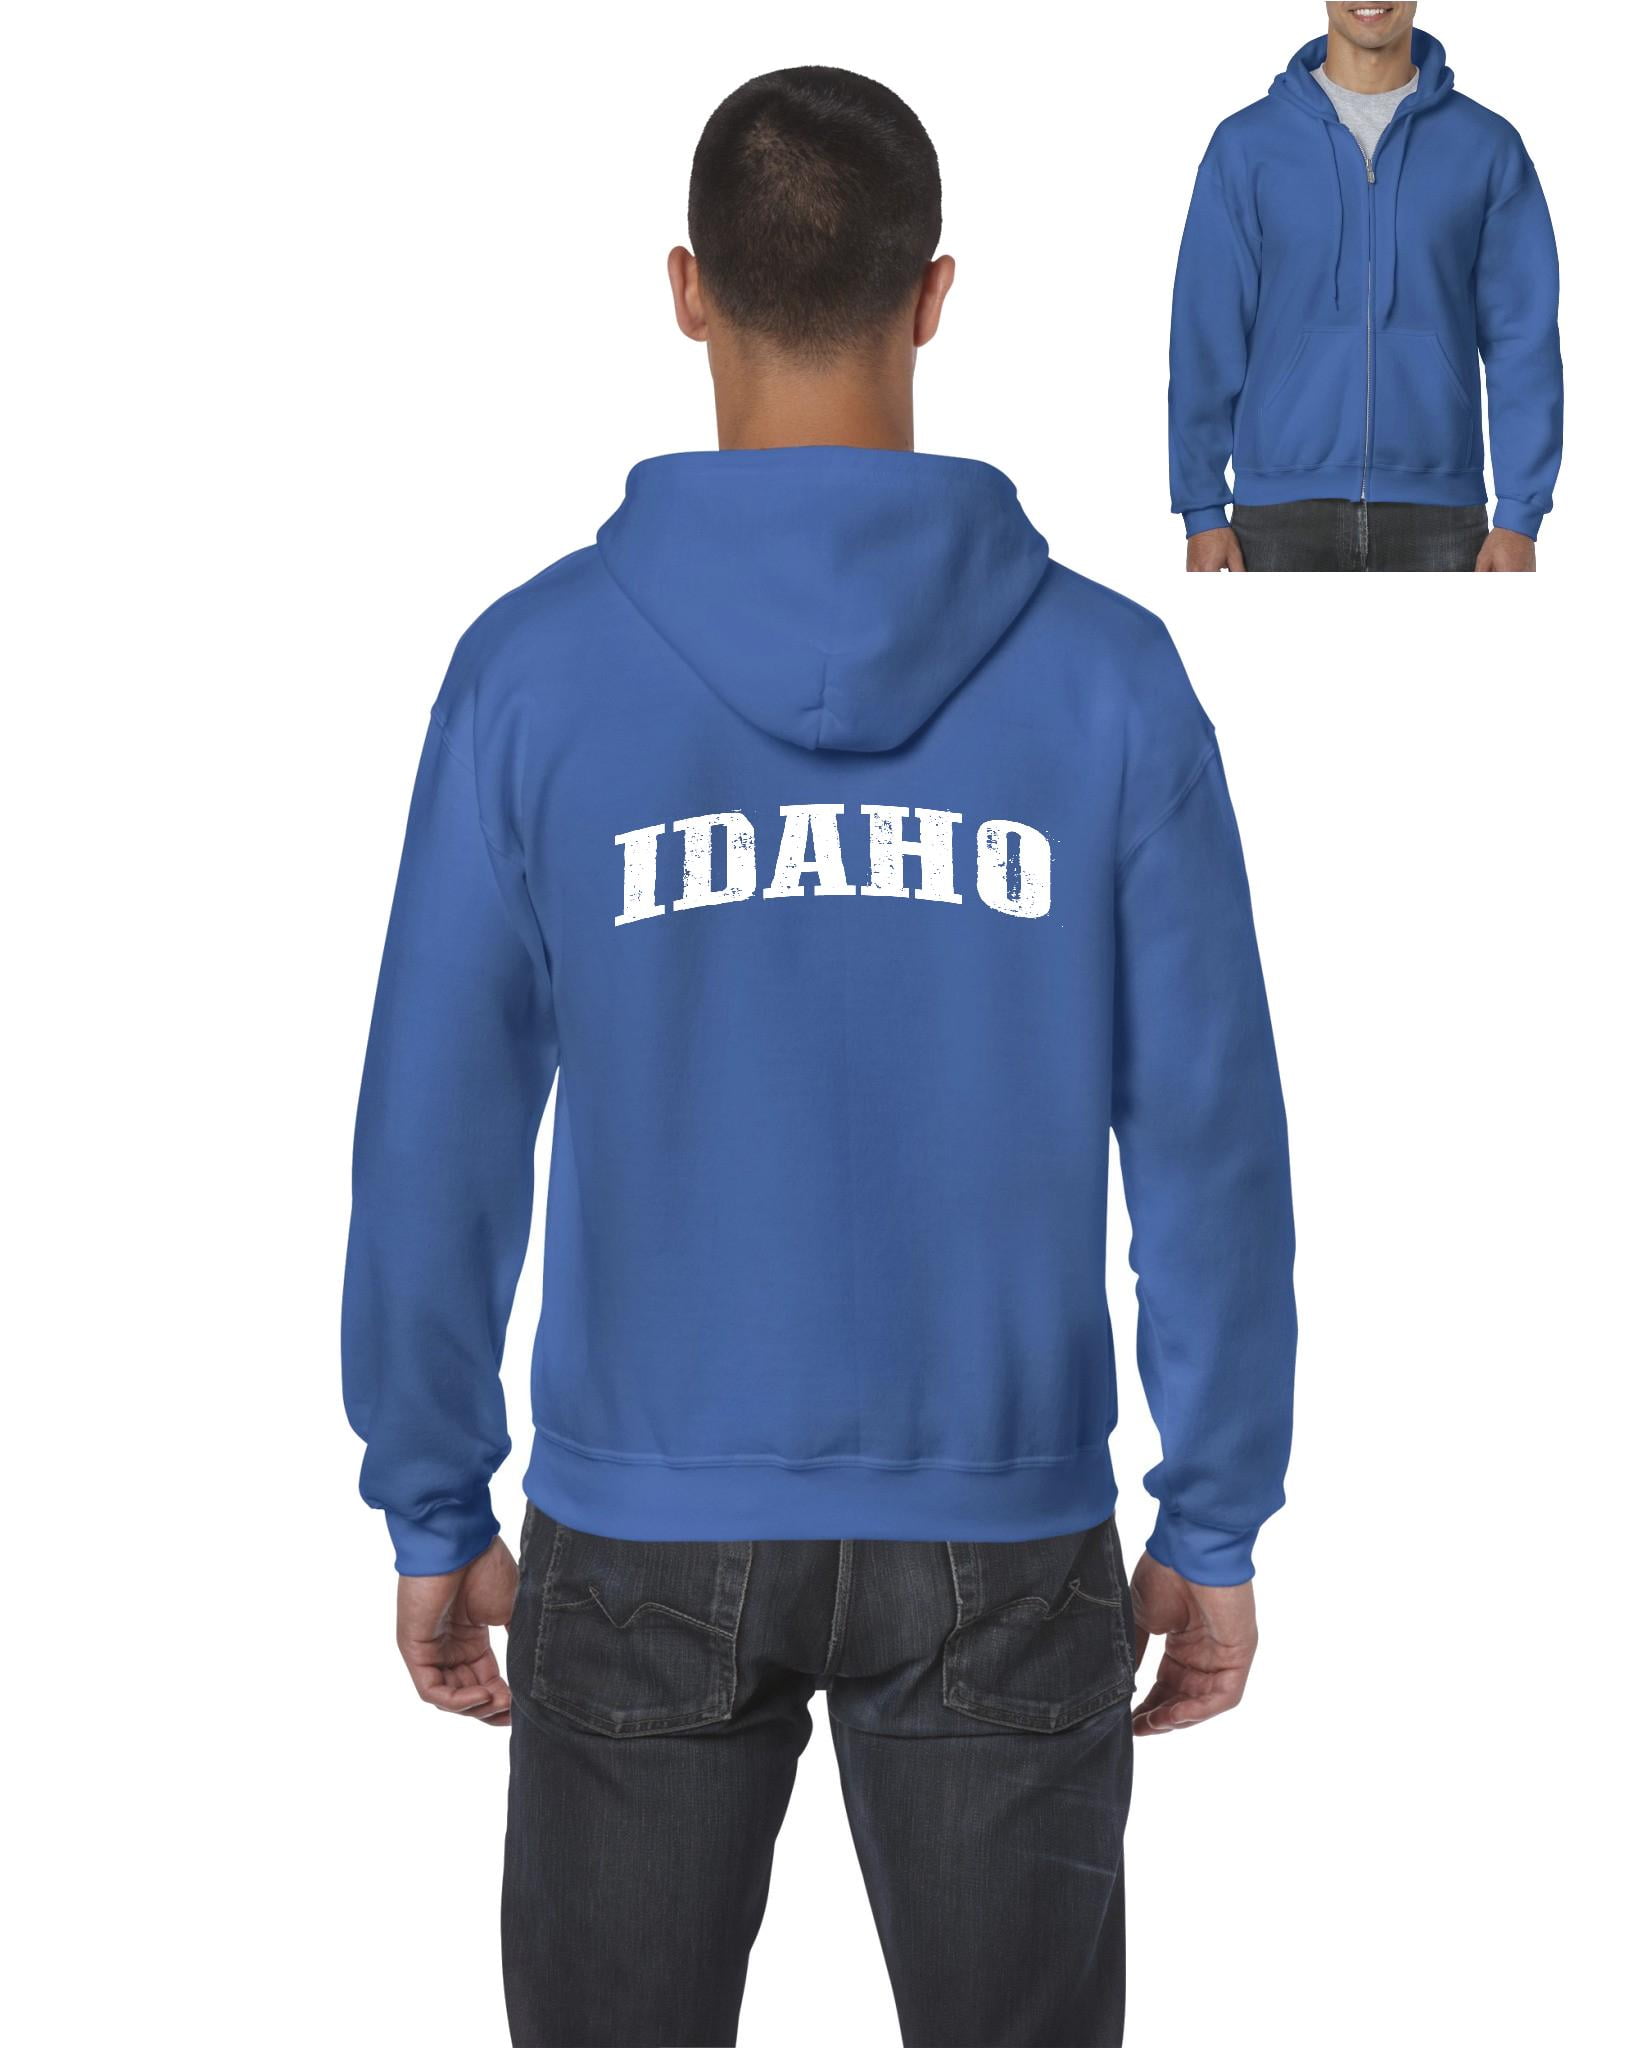 Tenacitee Girls Living in Idaho with New Hampshire Roots Hooded Sweatshirt